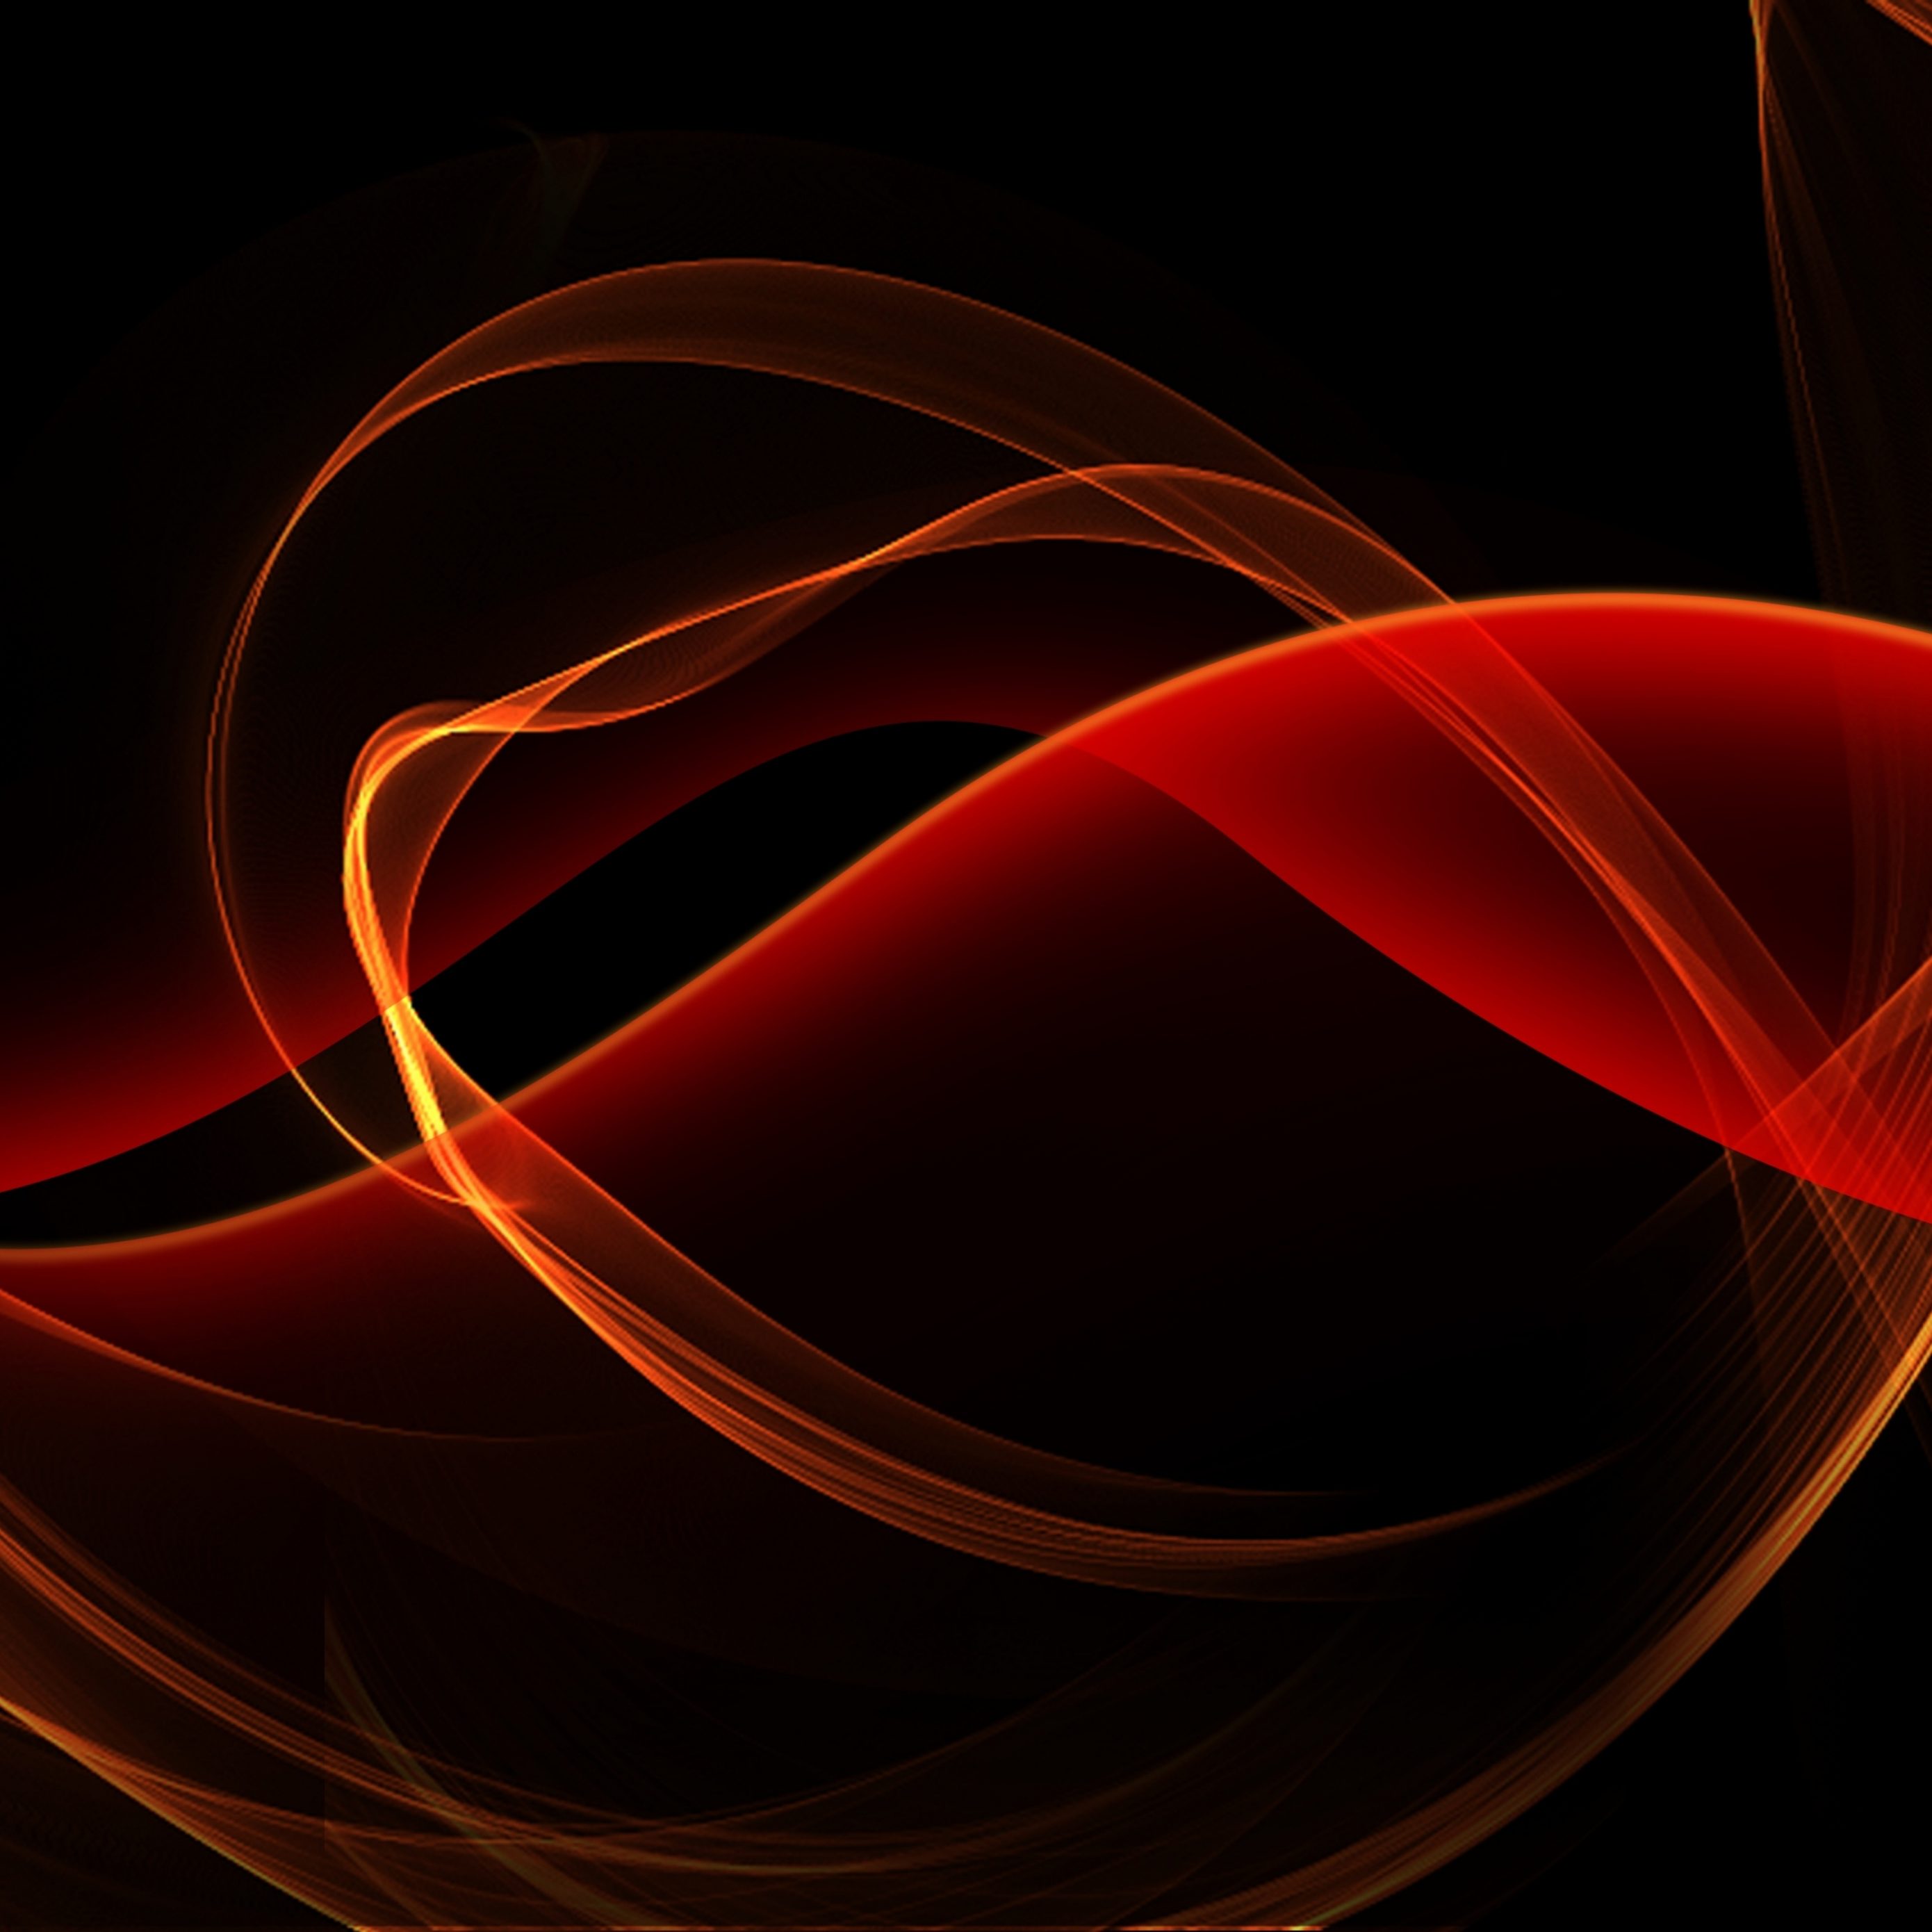 2780x2780 Parallax wallpaper 4k Black and Red Glowing Curves iPad Wallpaper 2780x2780 pixels resolution